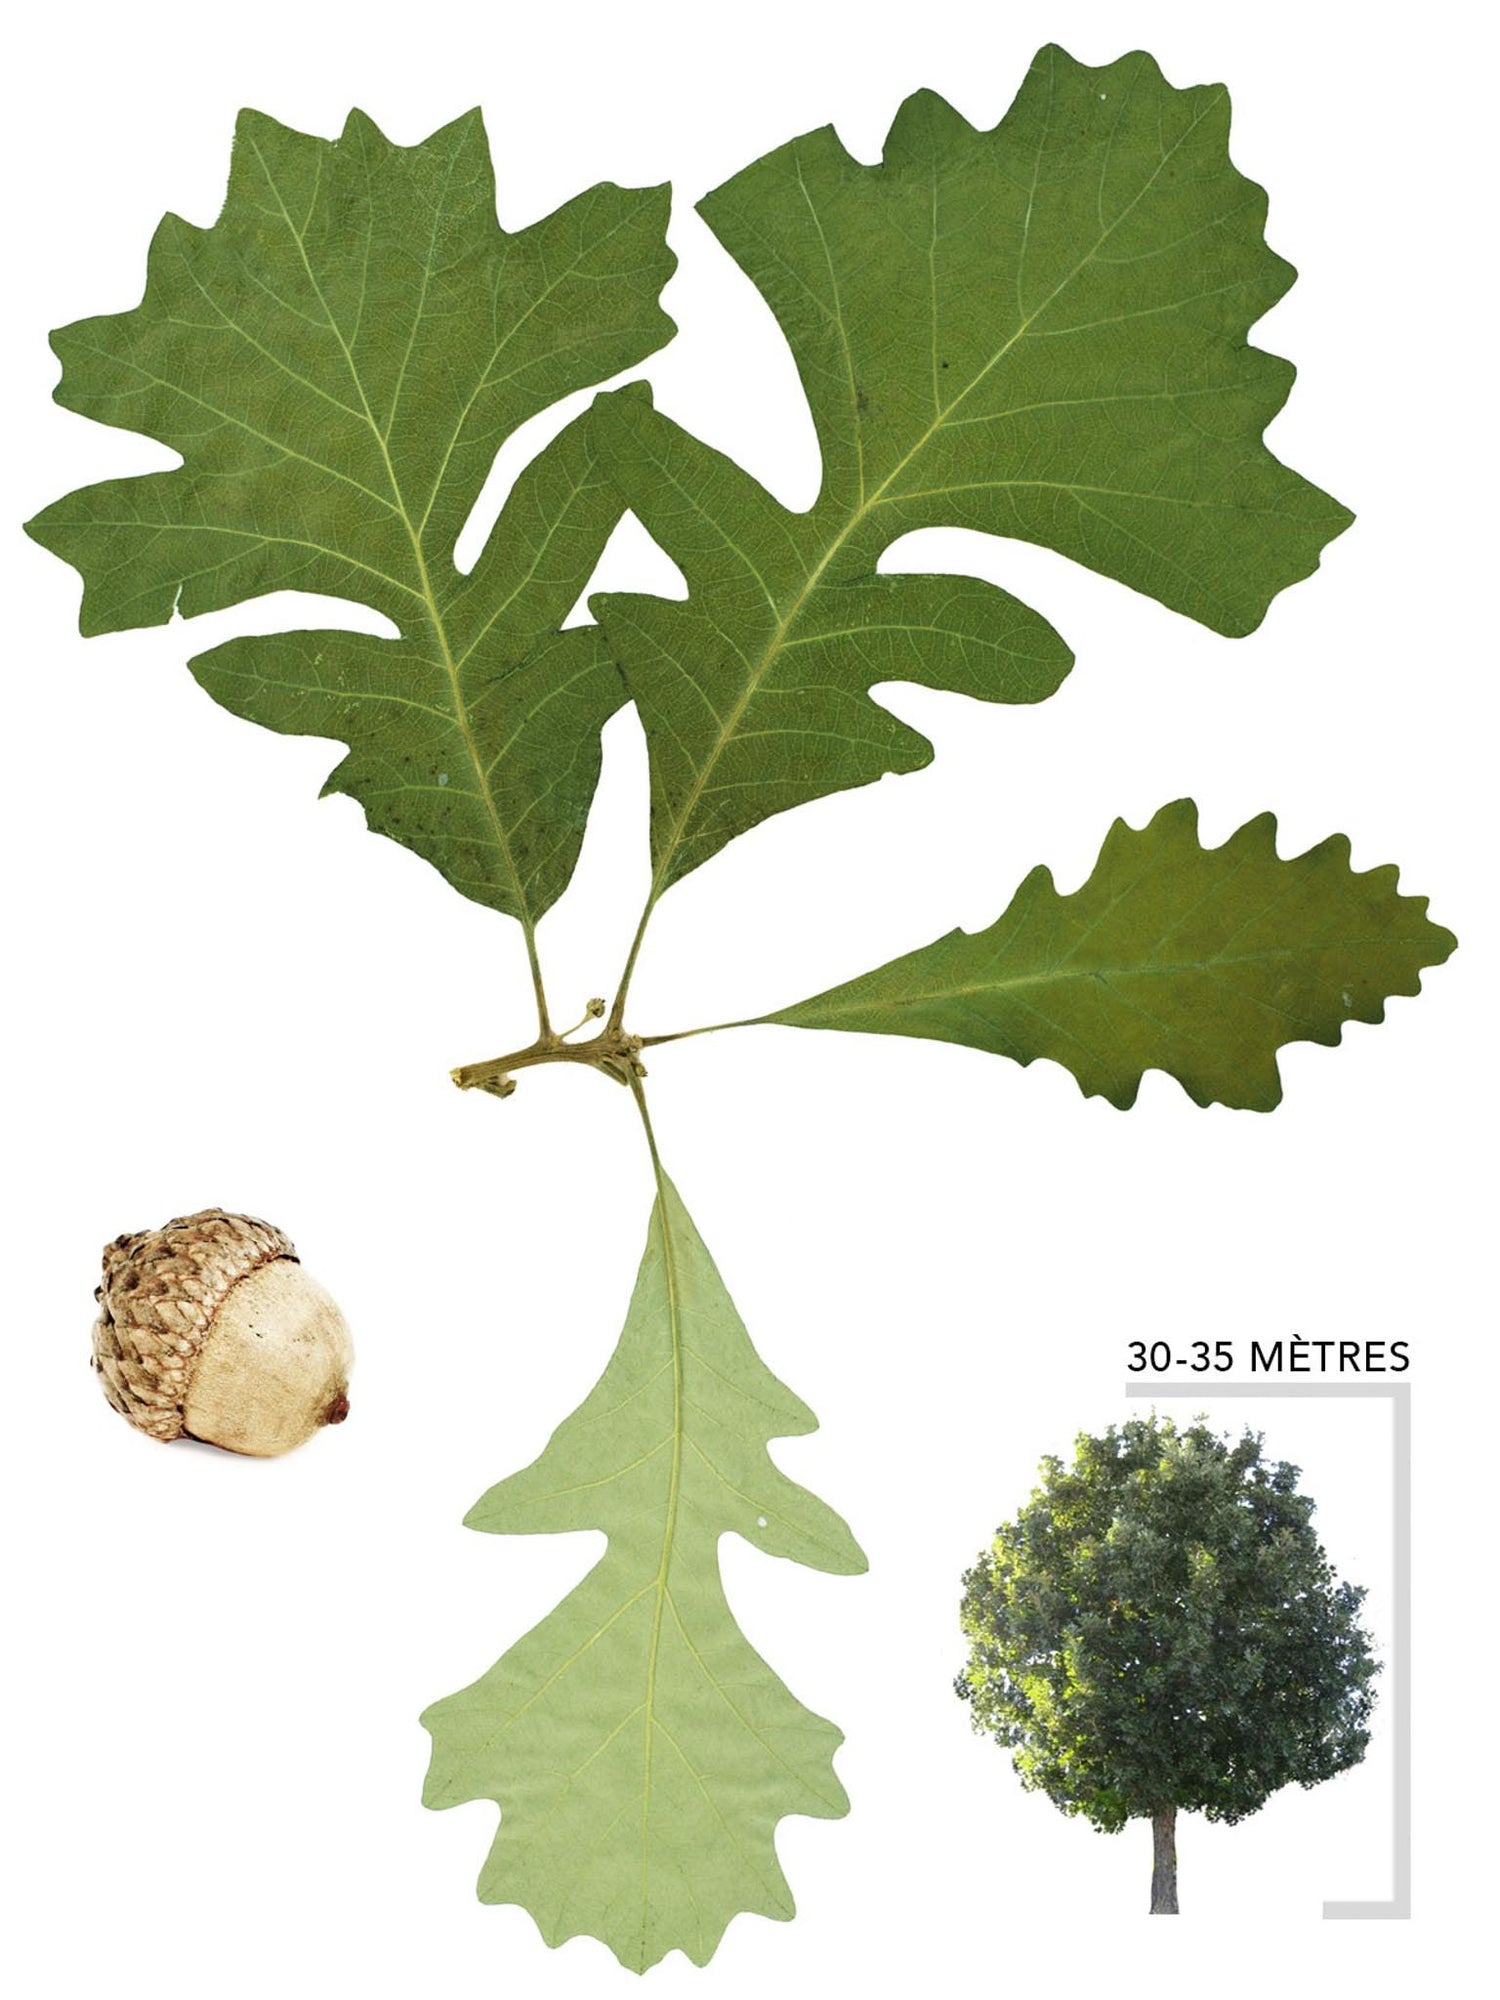 Chêne à gros fruits ou Quercus macrocarpa